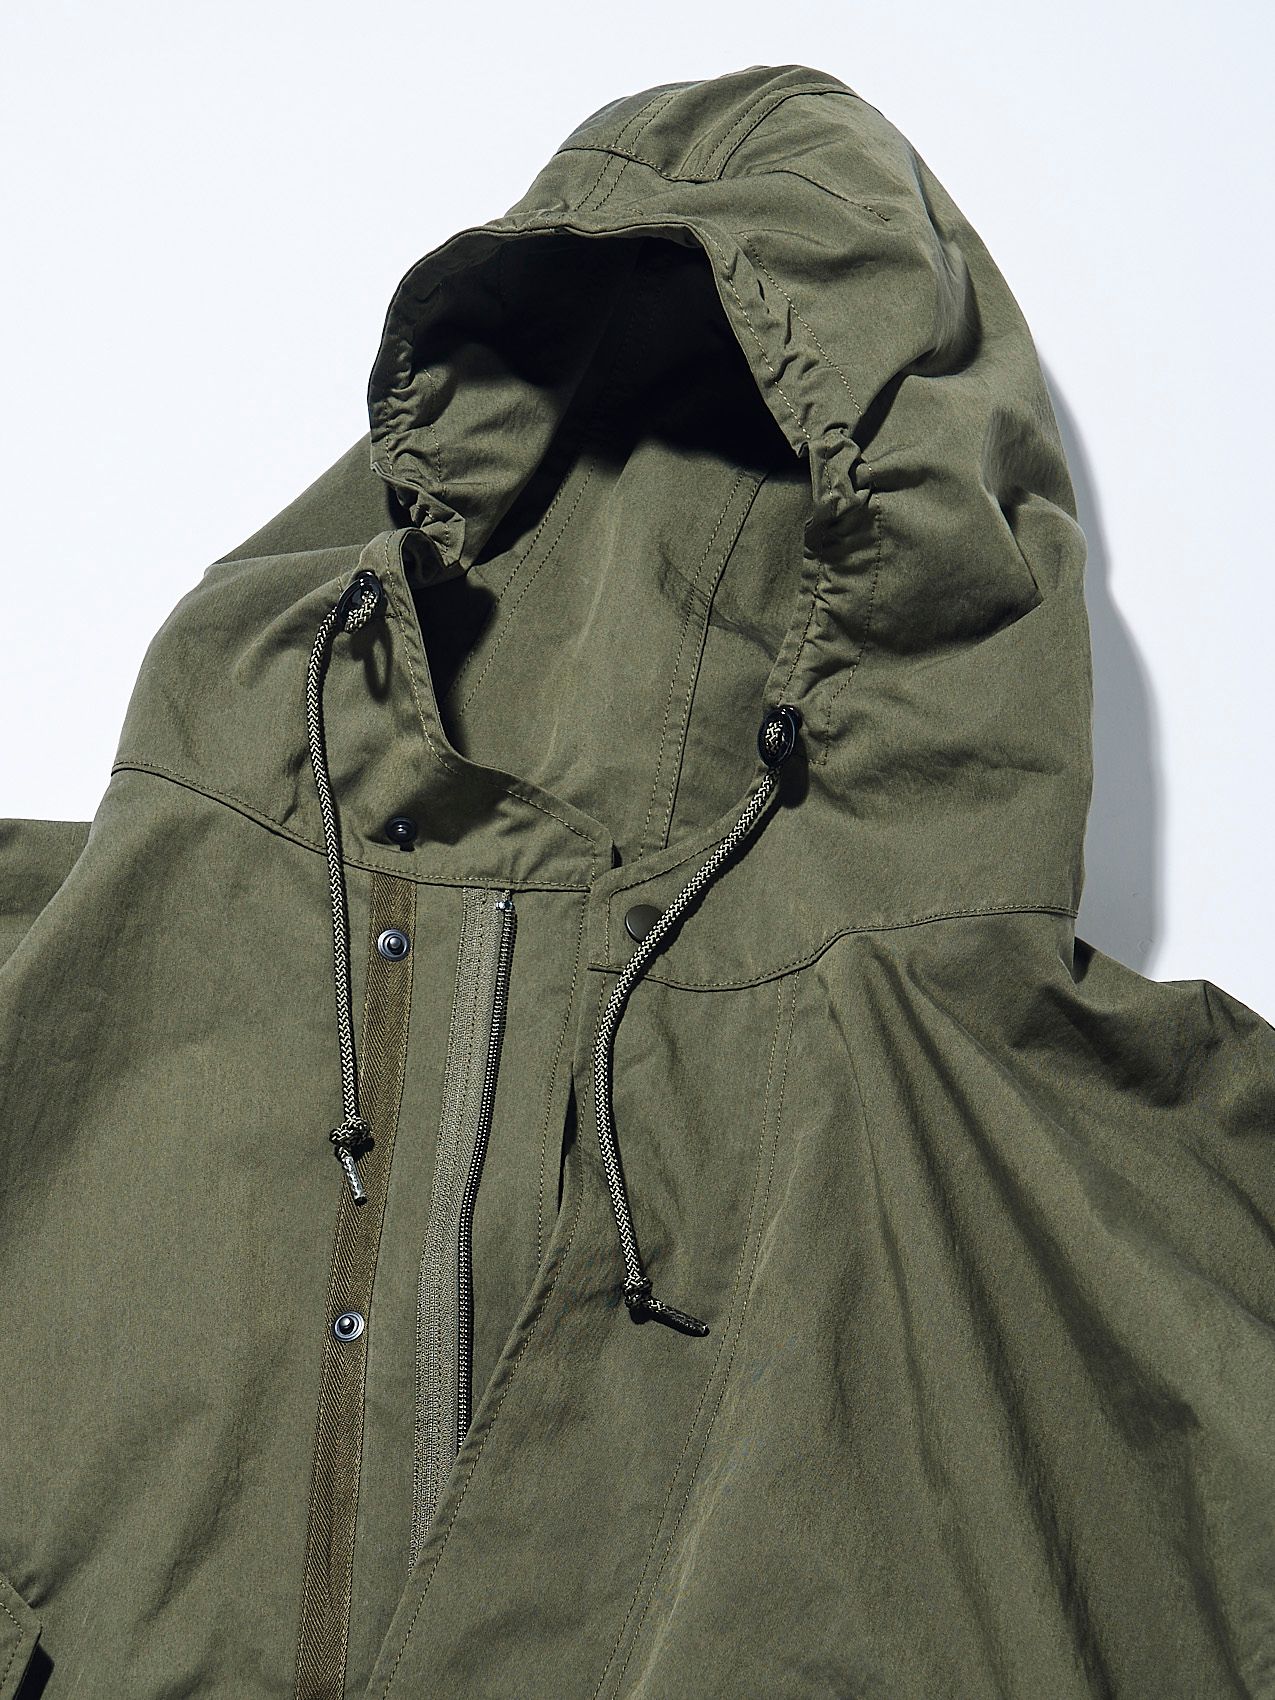 SEDAN ALL-PURPOSE - NYCO Hooded Jacket | Stripe Online Store